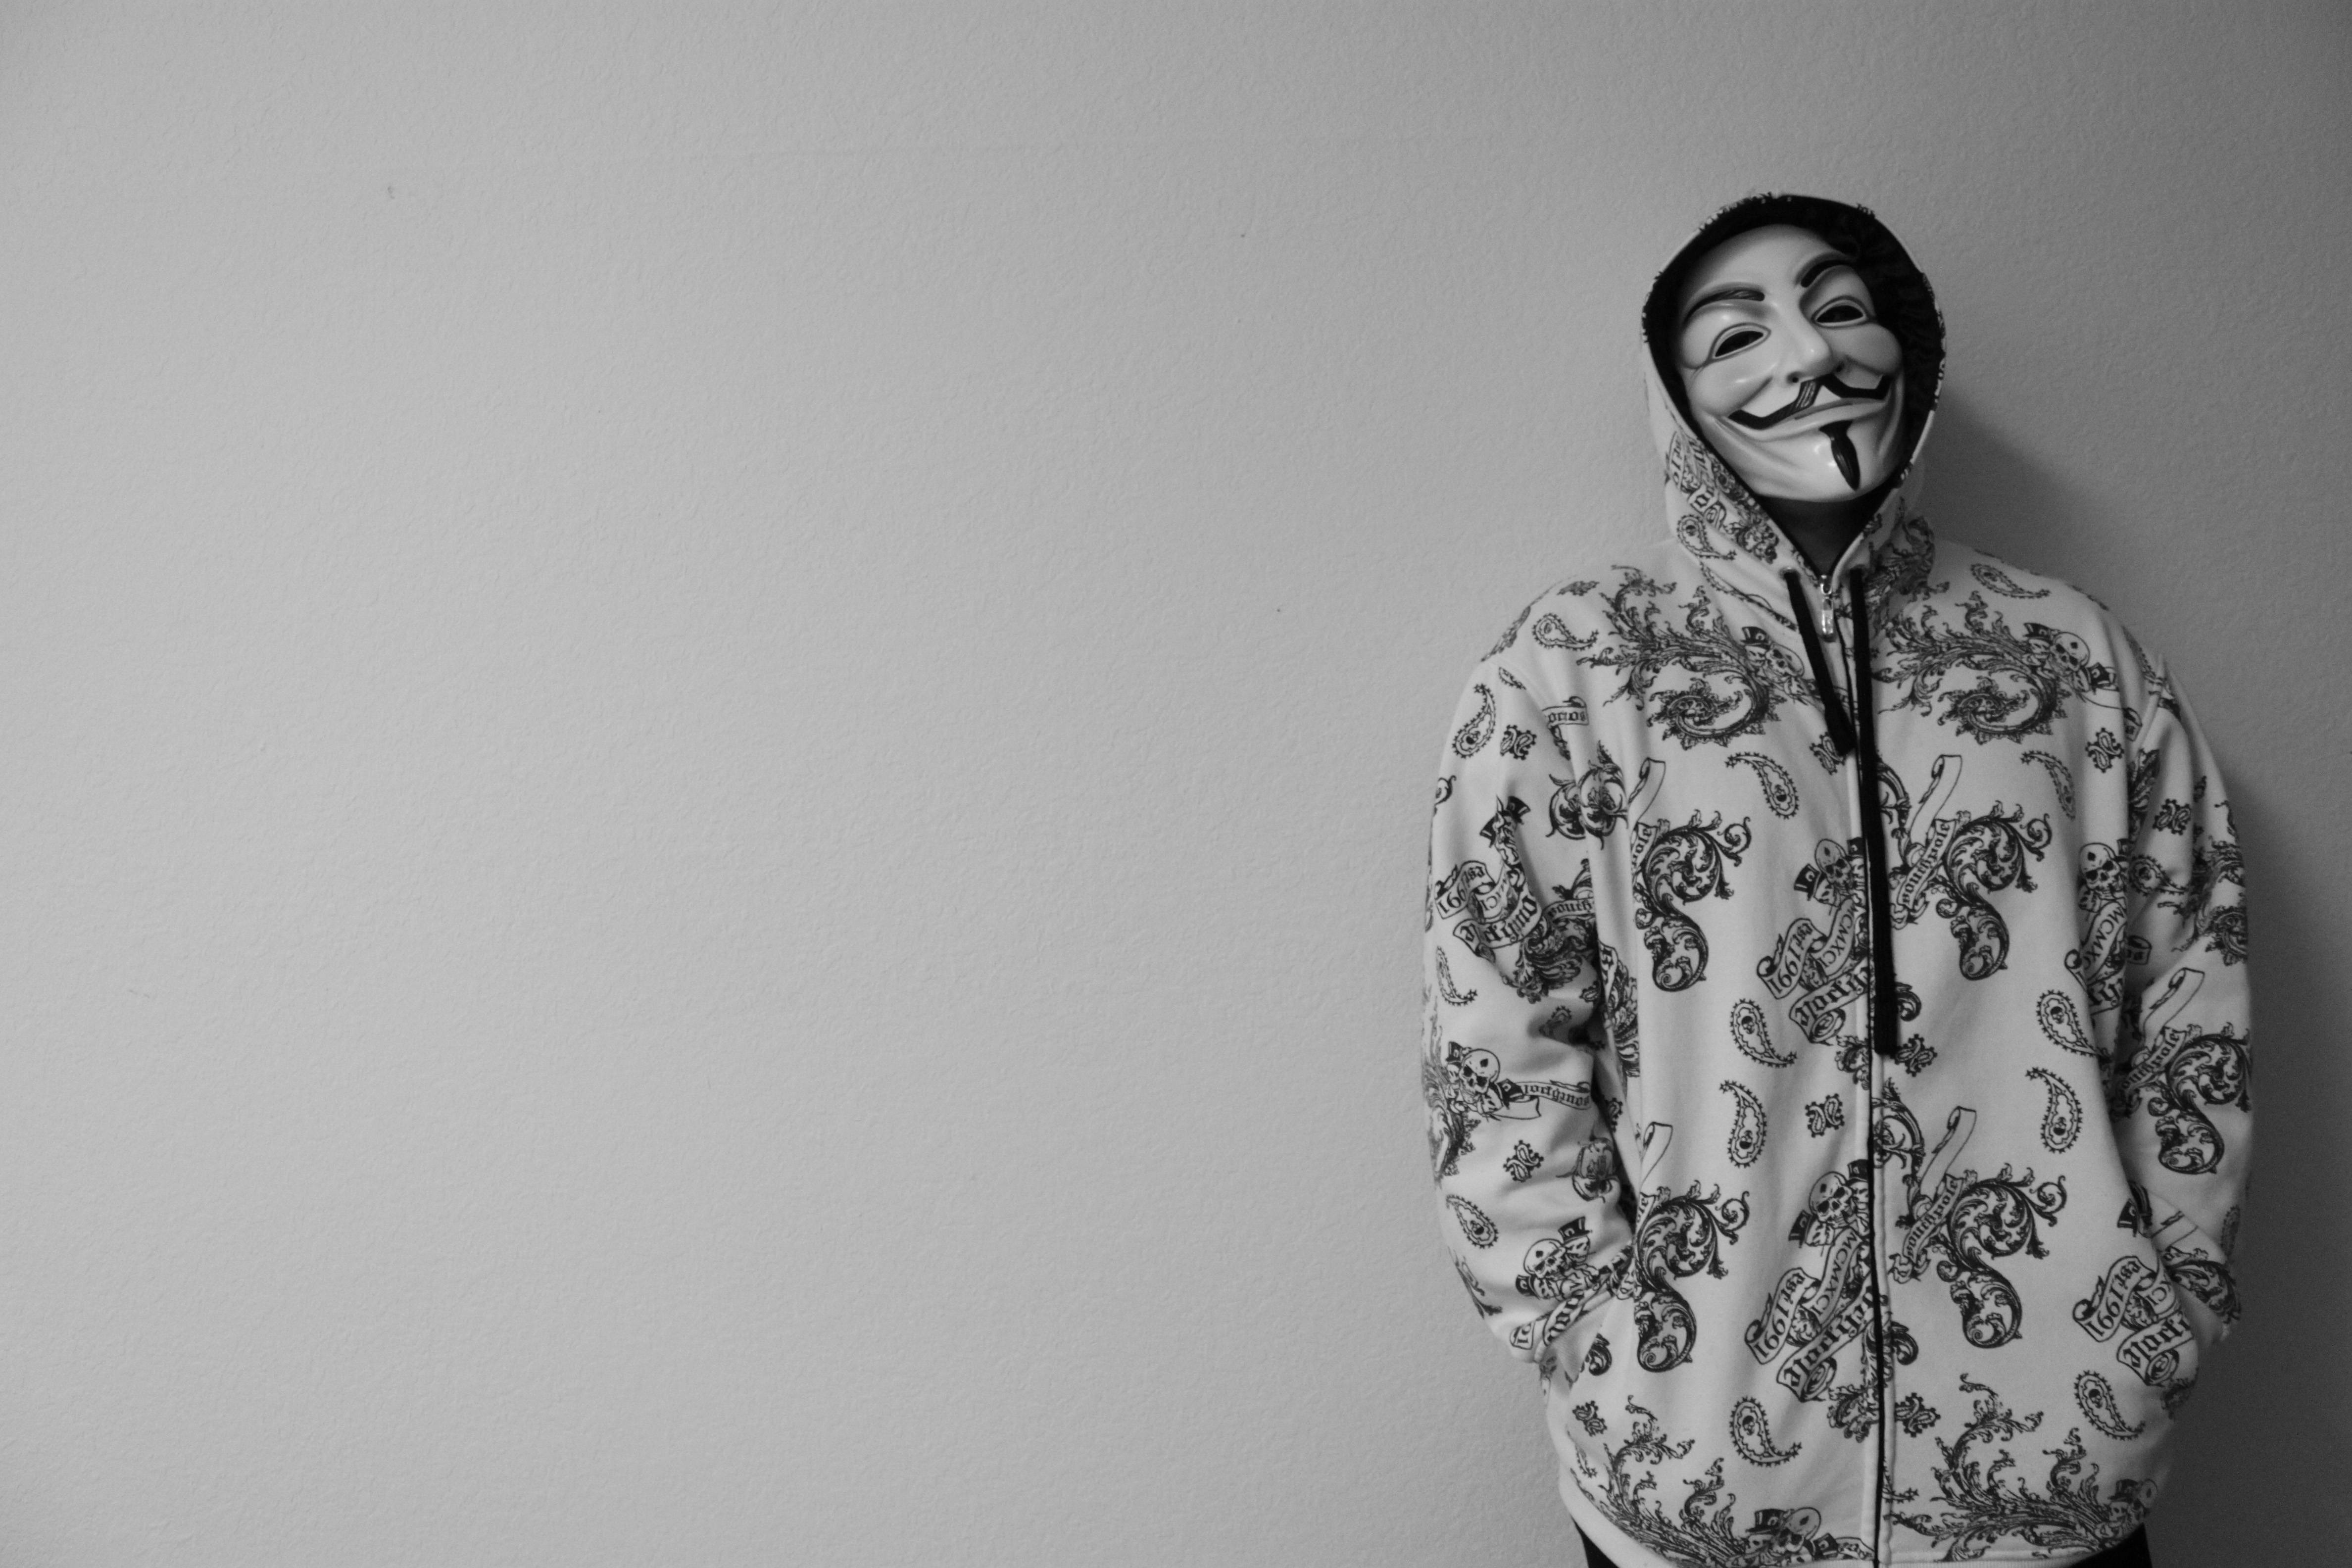 Anonymous Masks Wallpaper